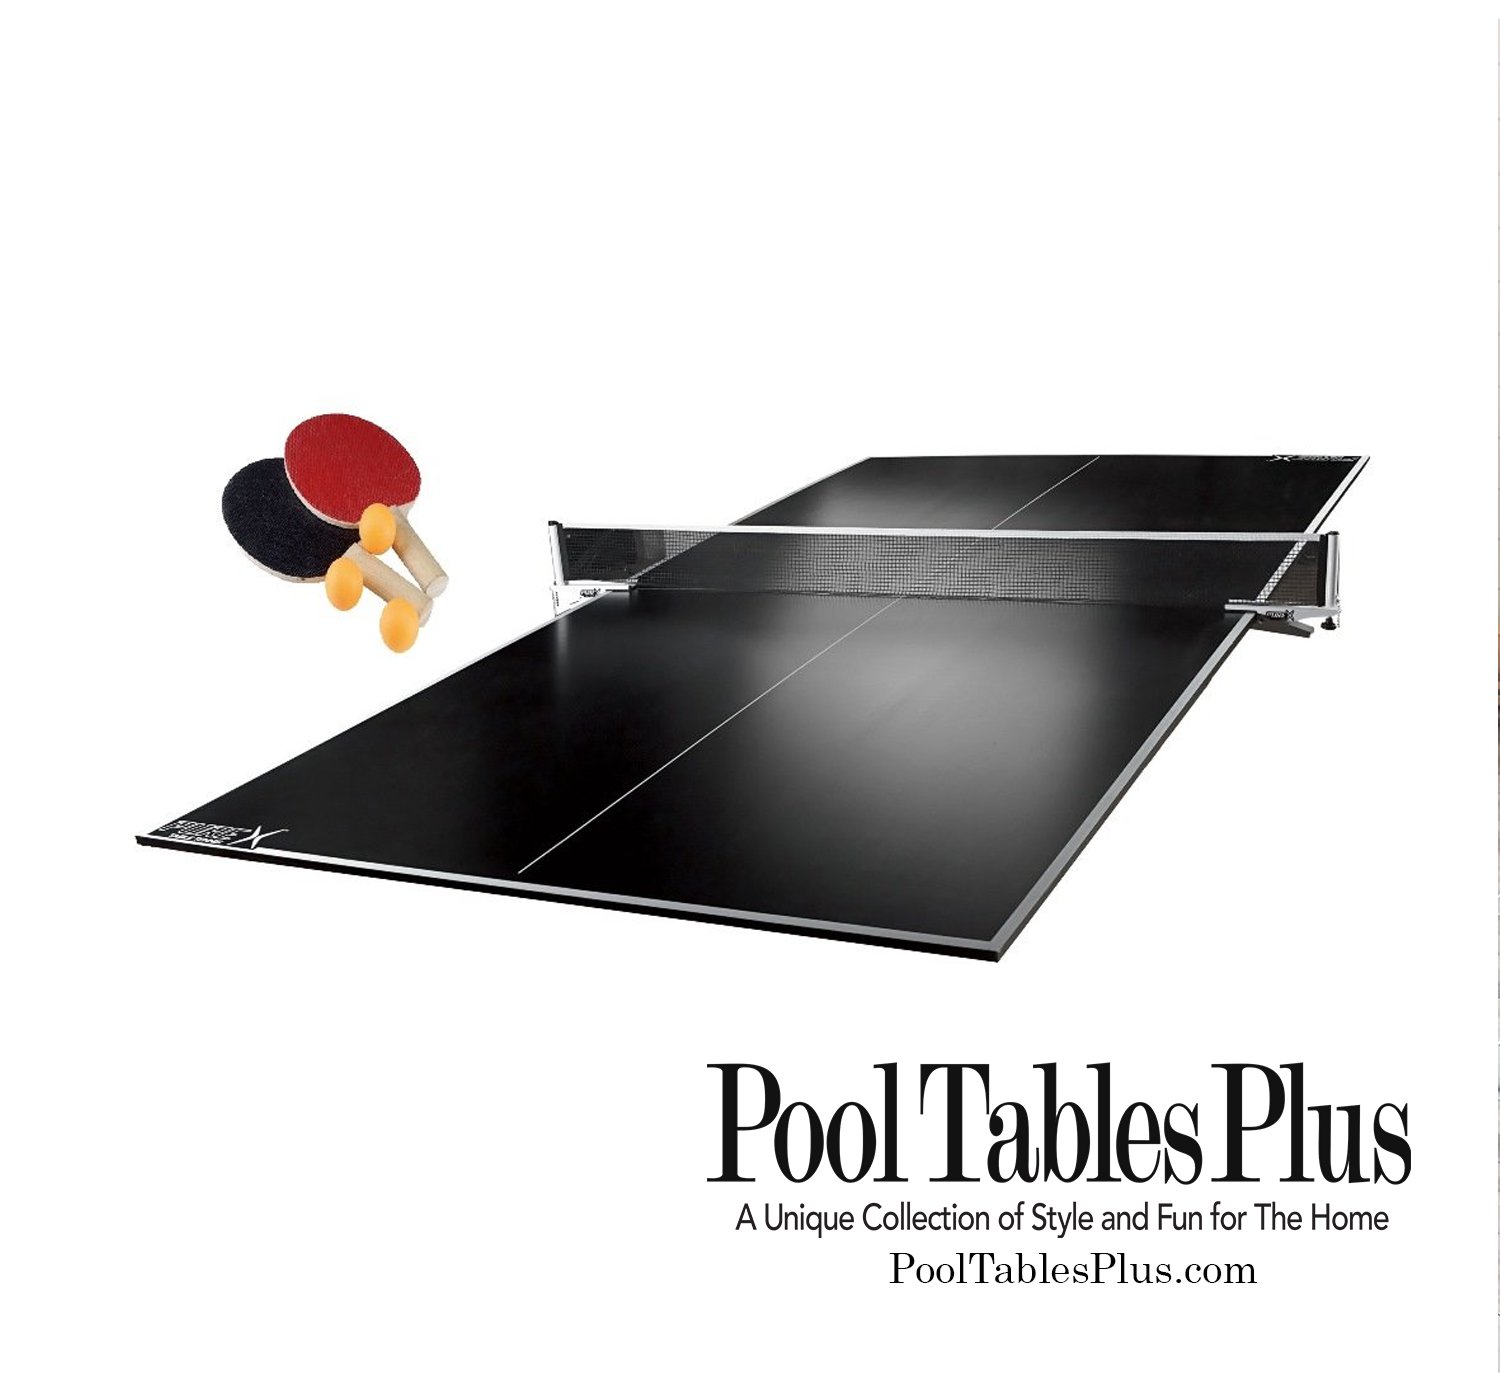 ping pong conversion top